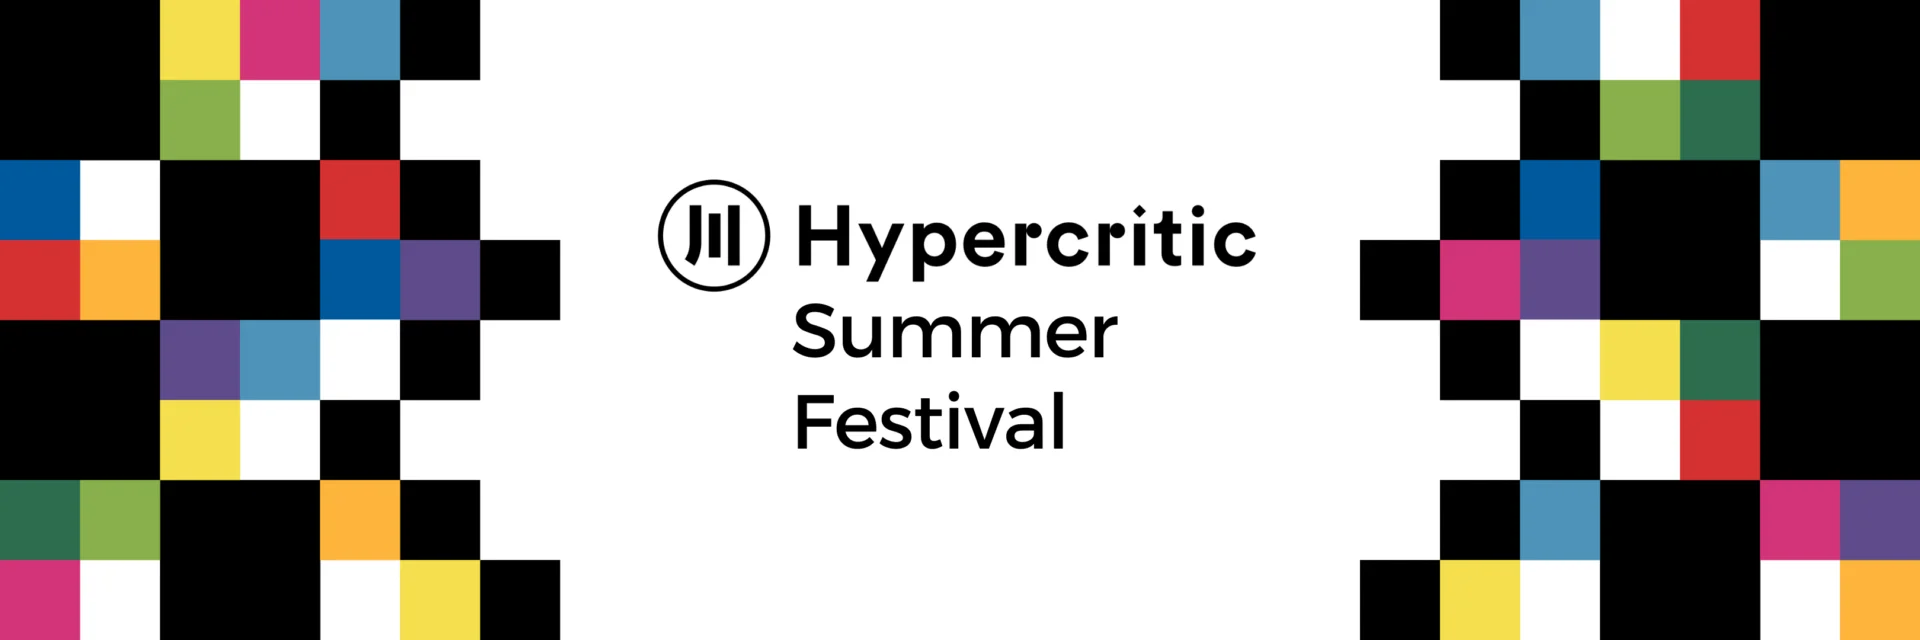 Hypercritic Summer Festival 2021 | A celebration